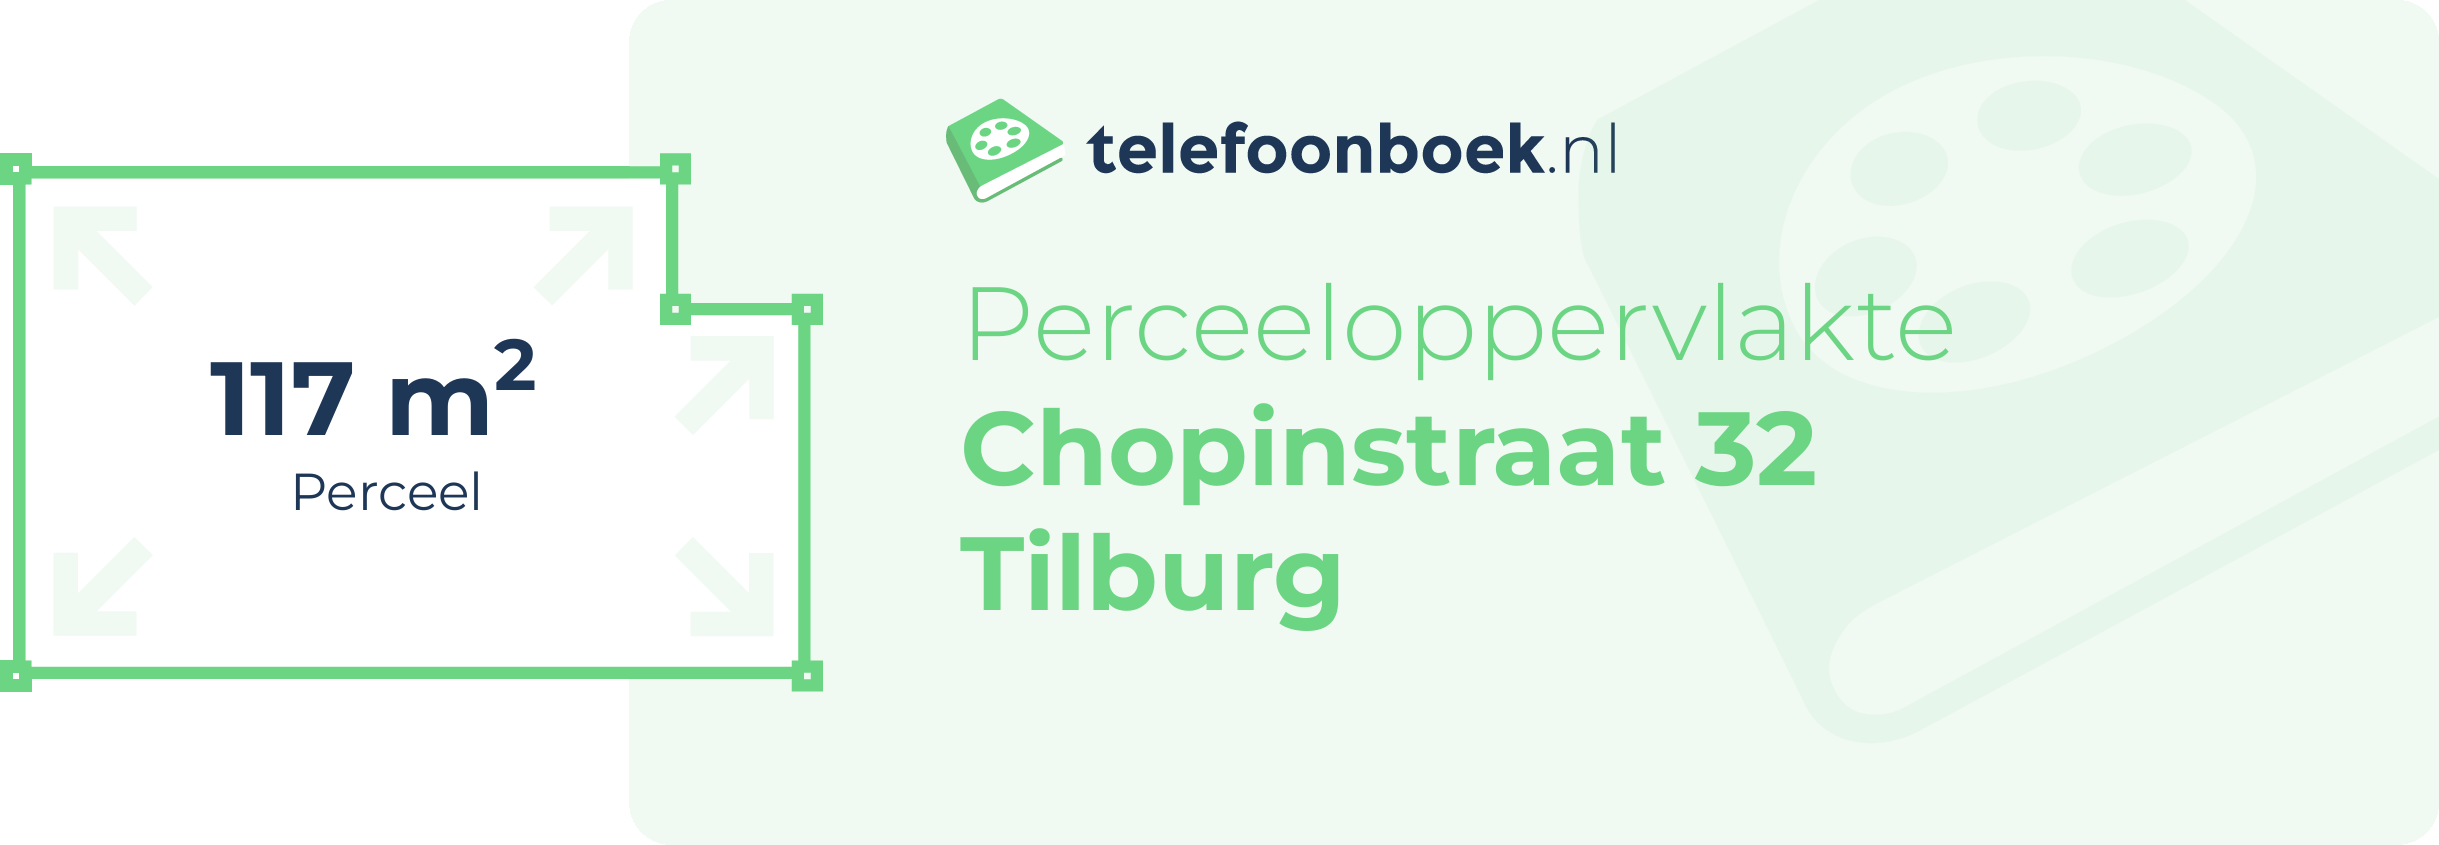 Perceeloppervlakte Chopinstraat 32 Tilburg